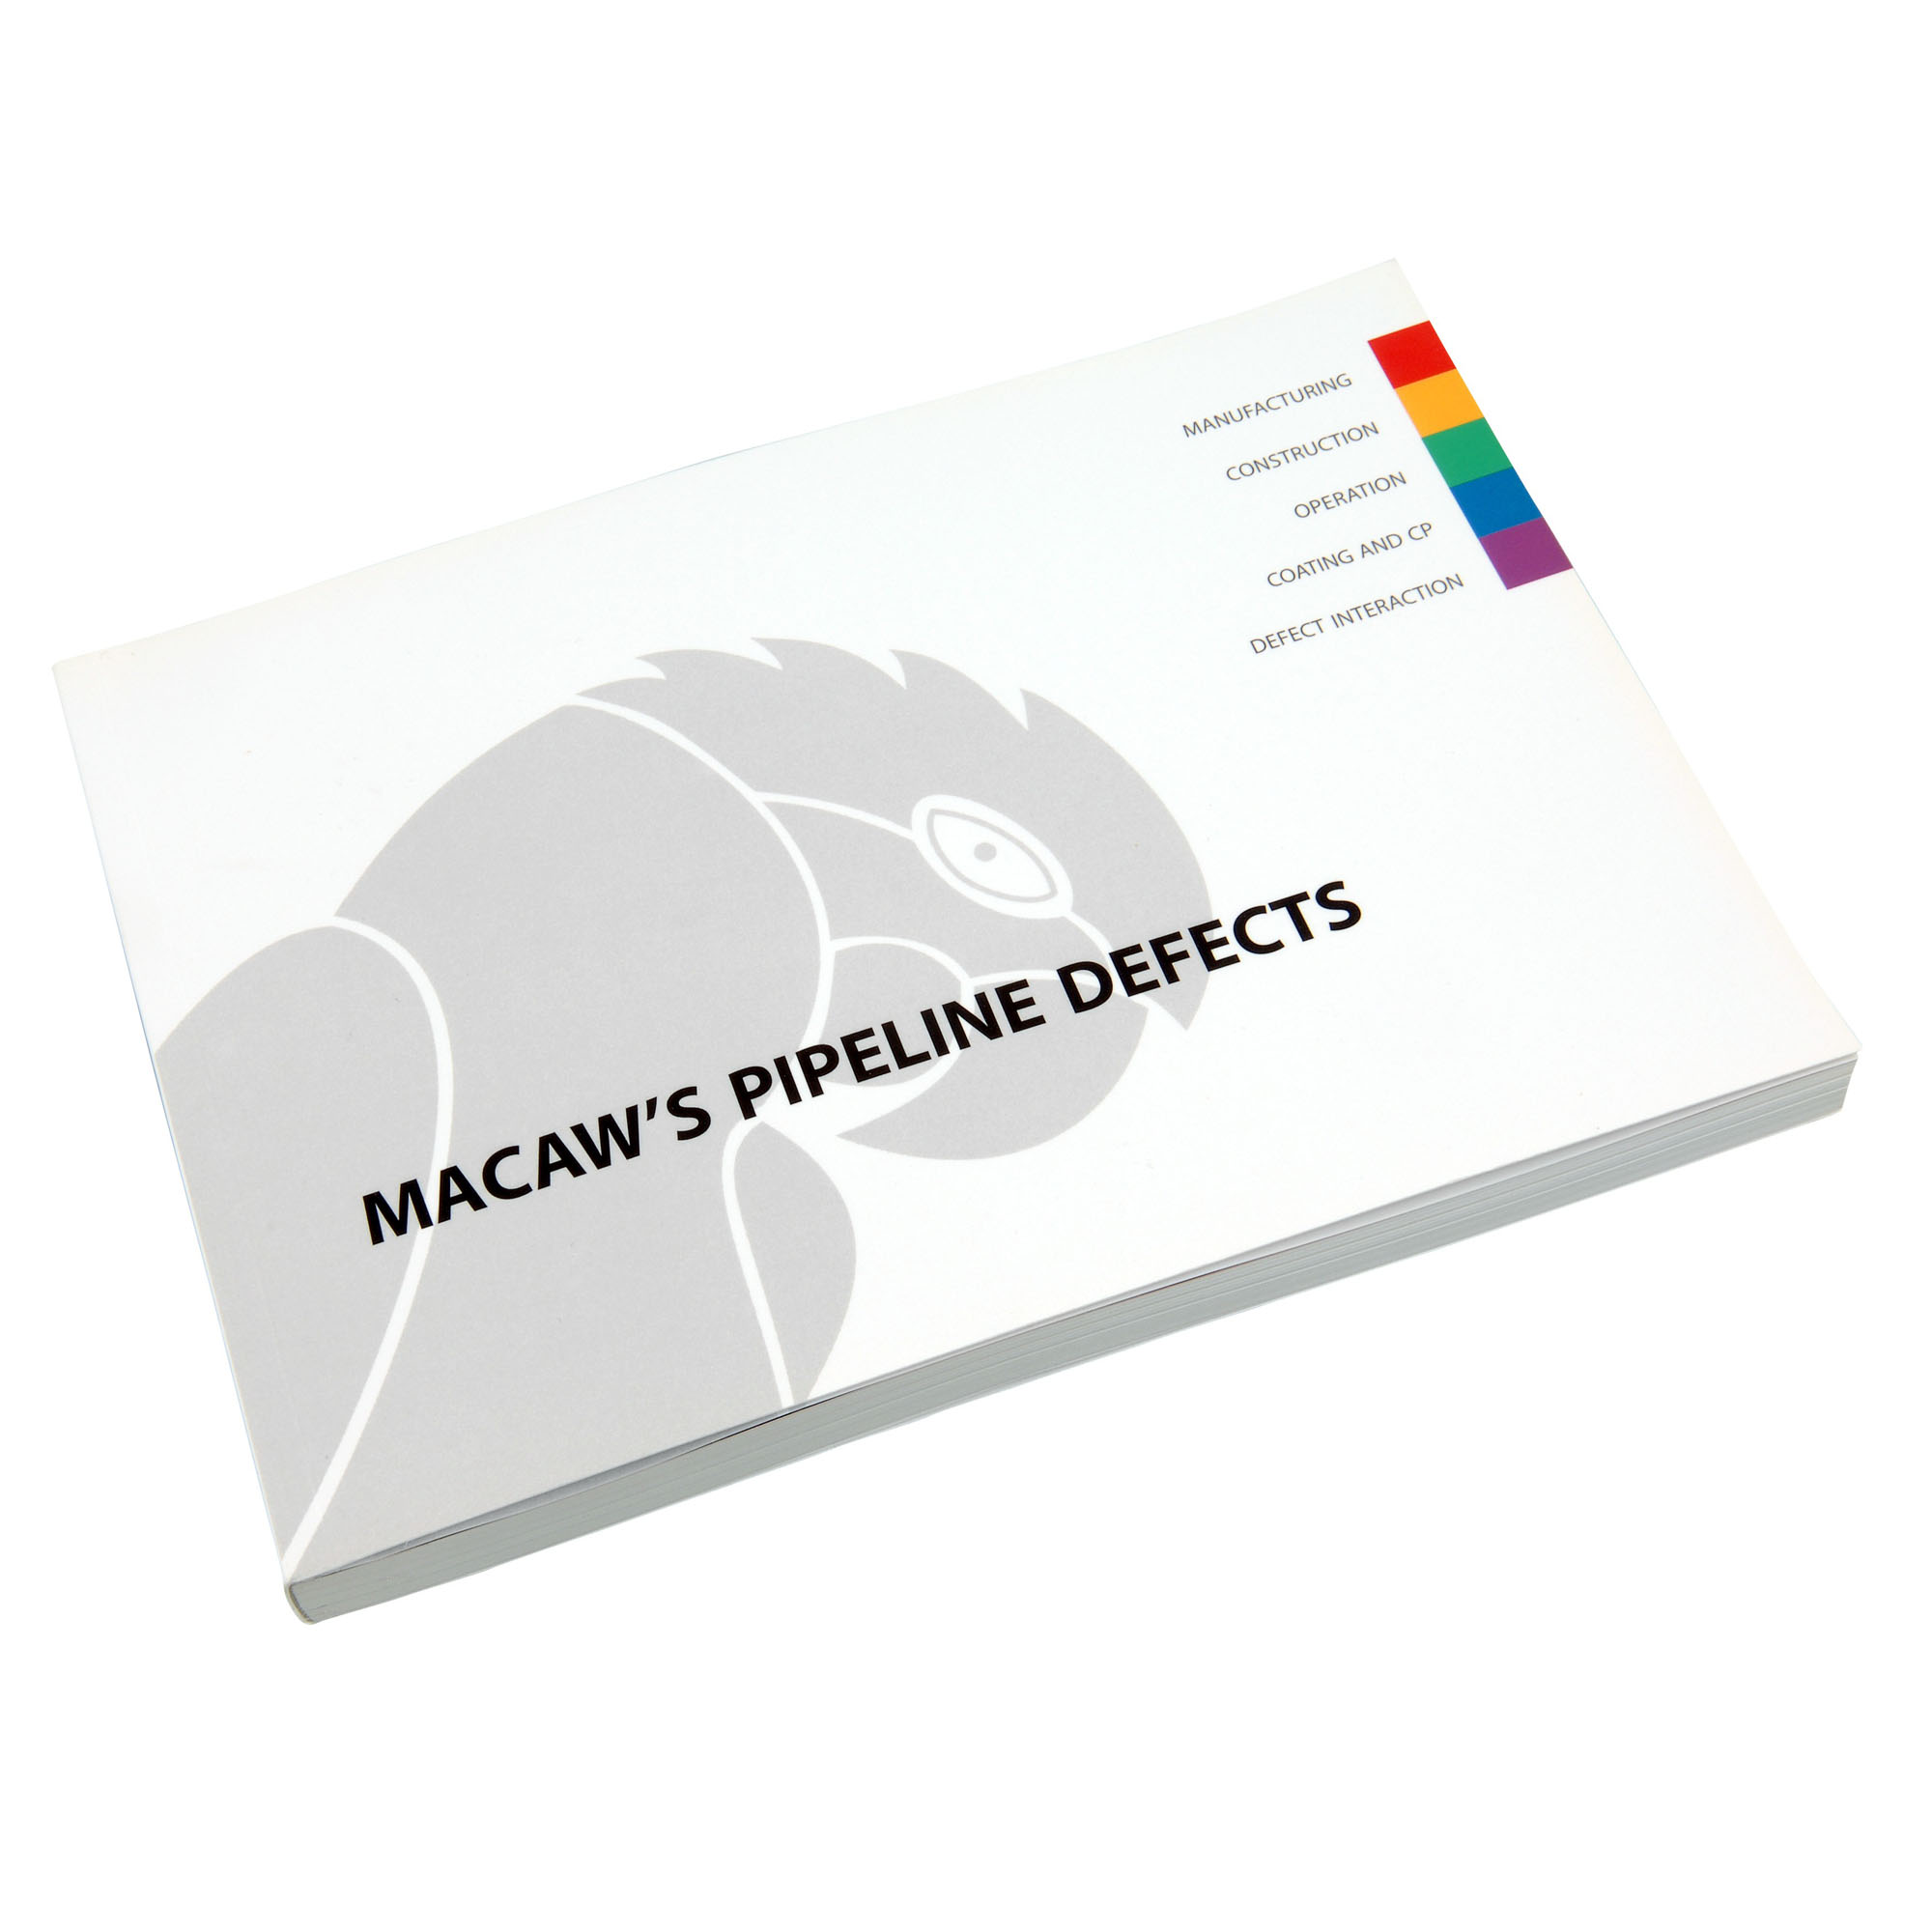 Elcometer Macaw Pipeline Defects